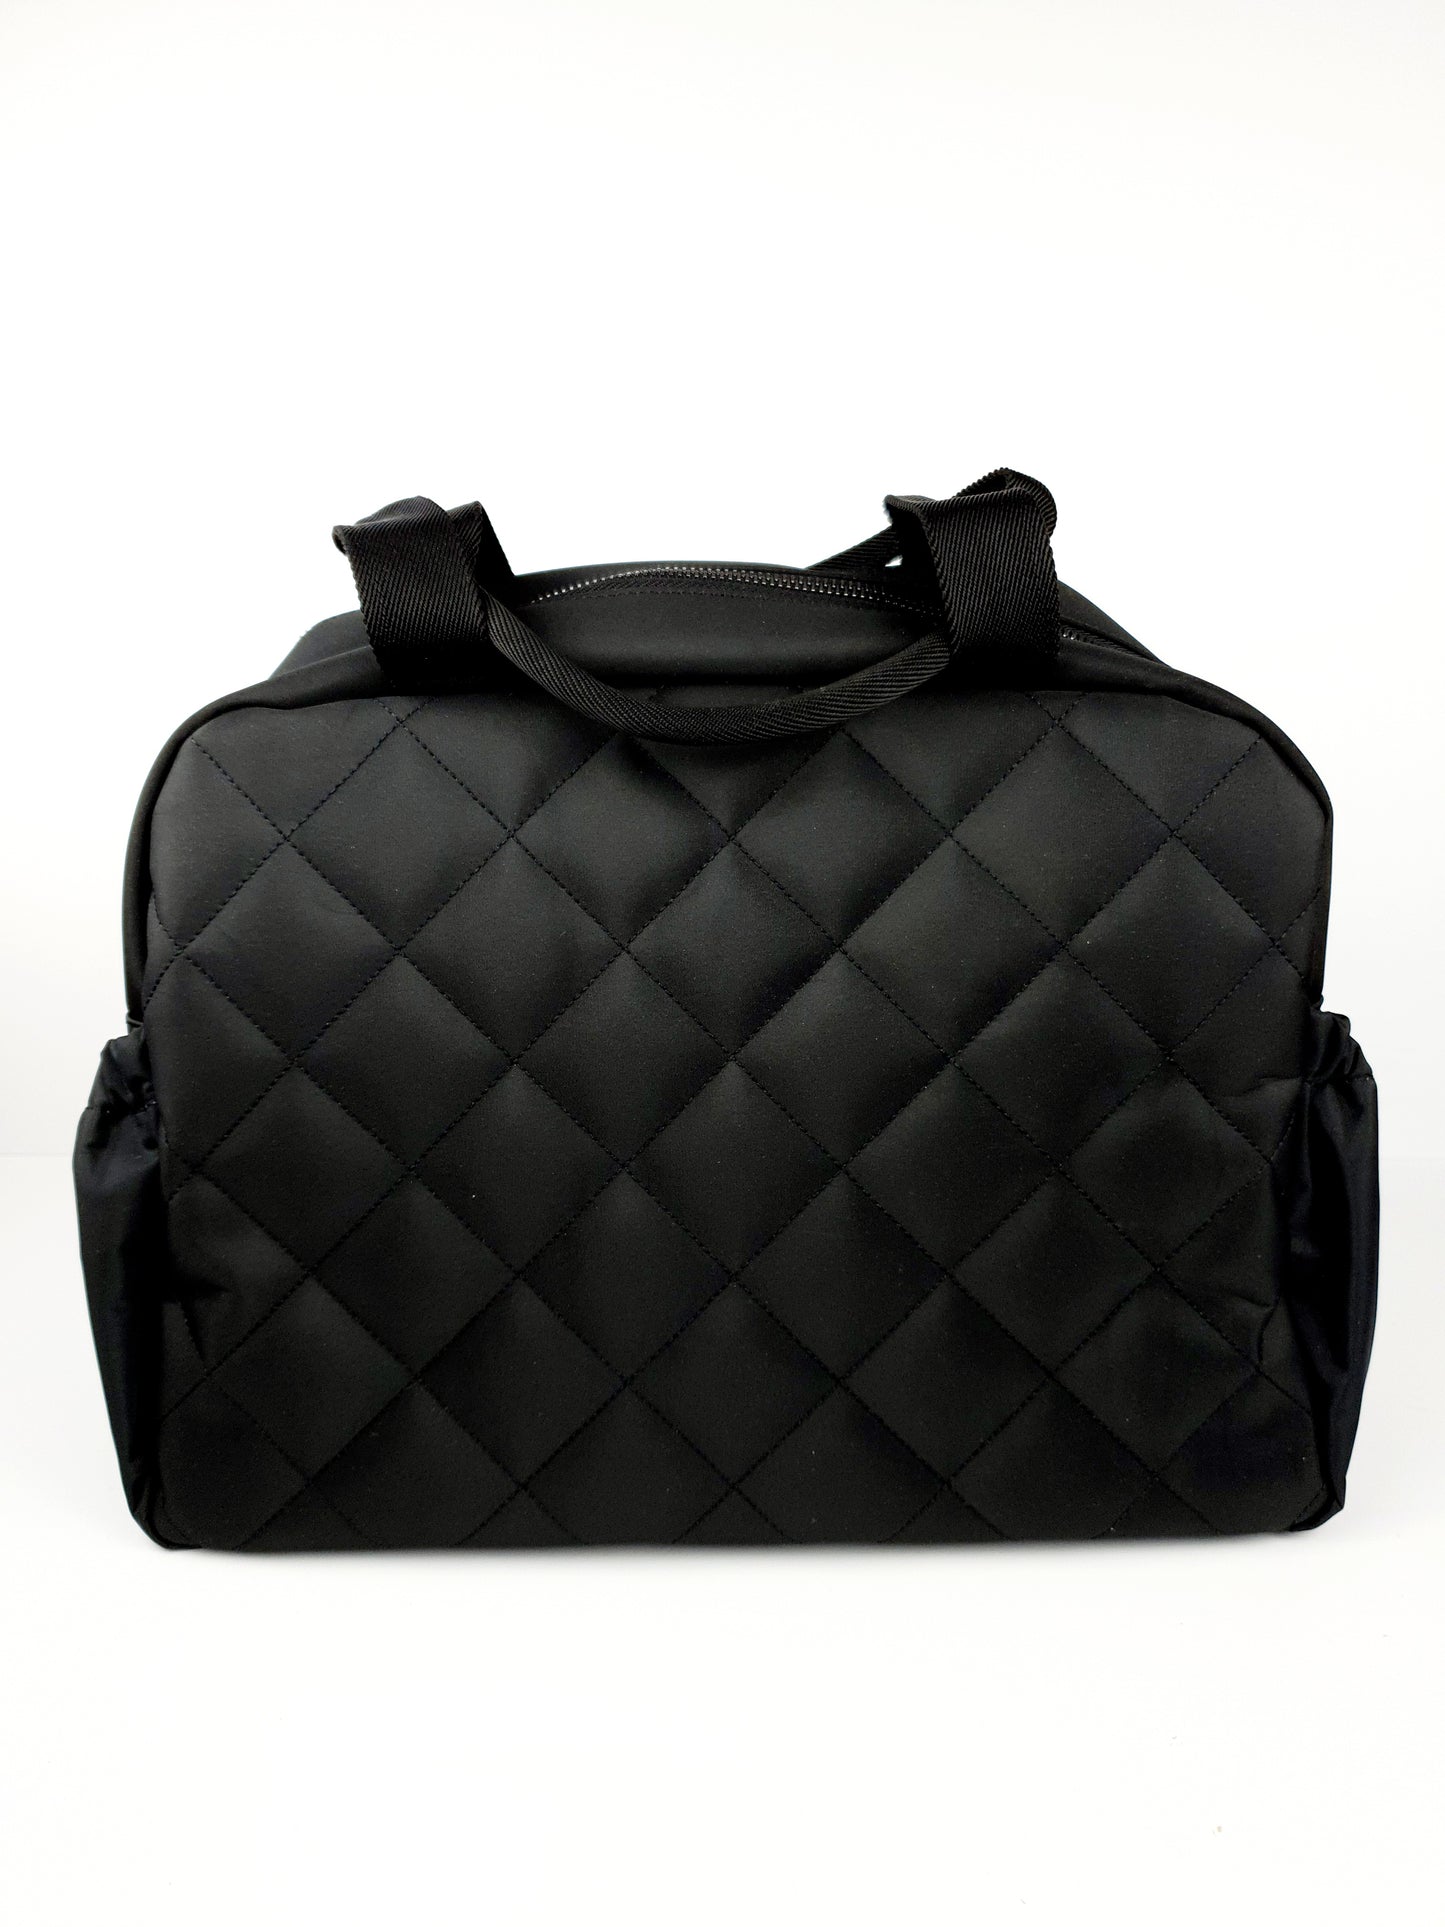 Carry All Nappy Bag - Black Diamond Quilt